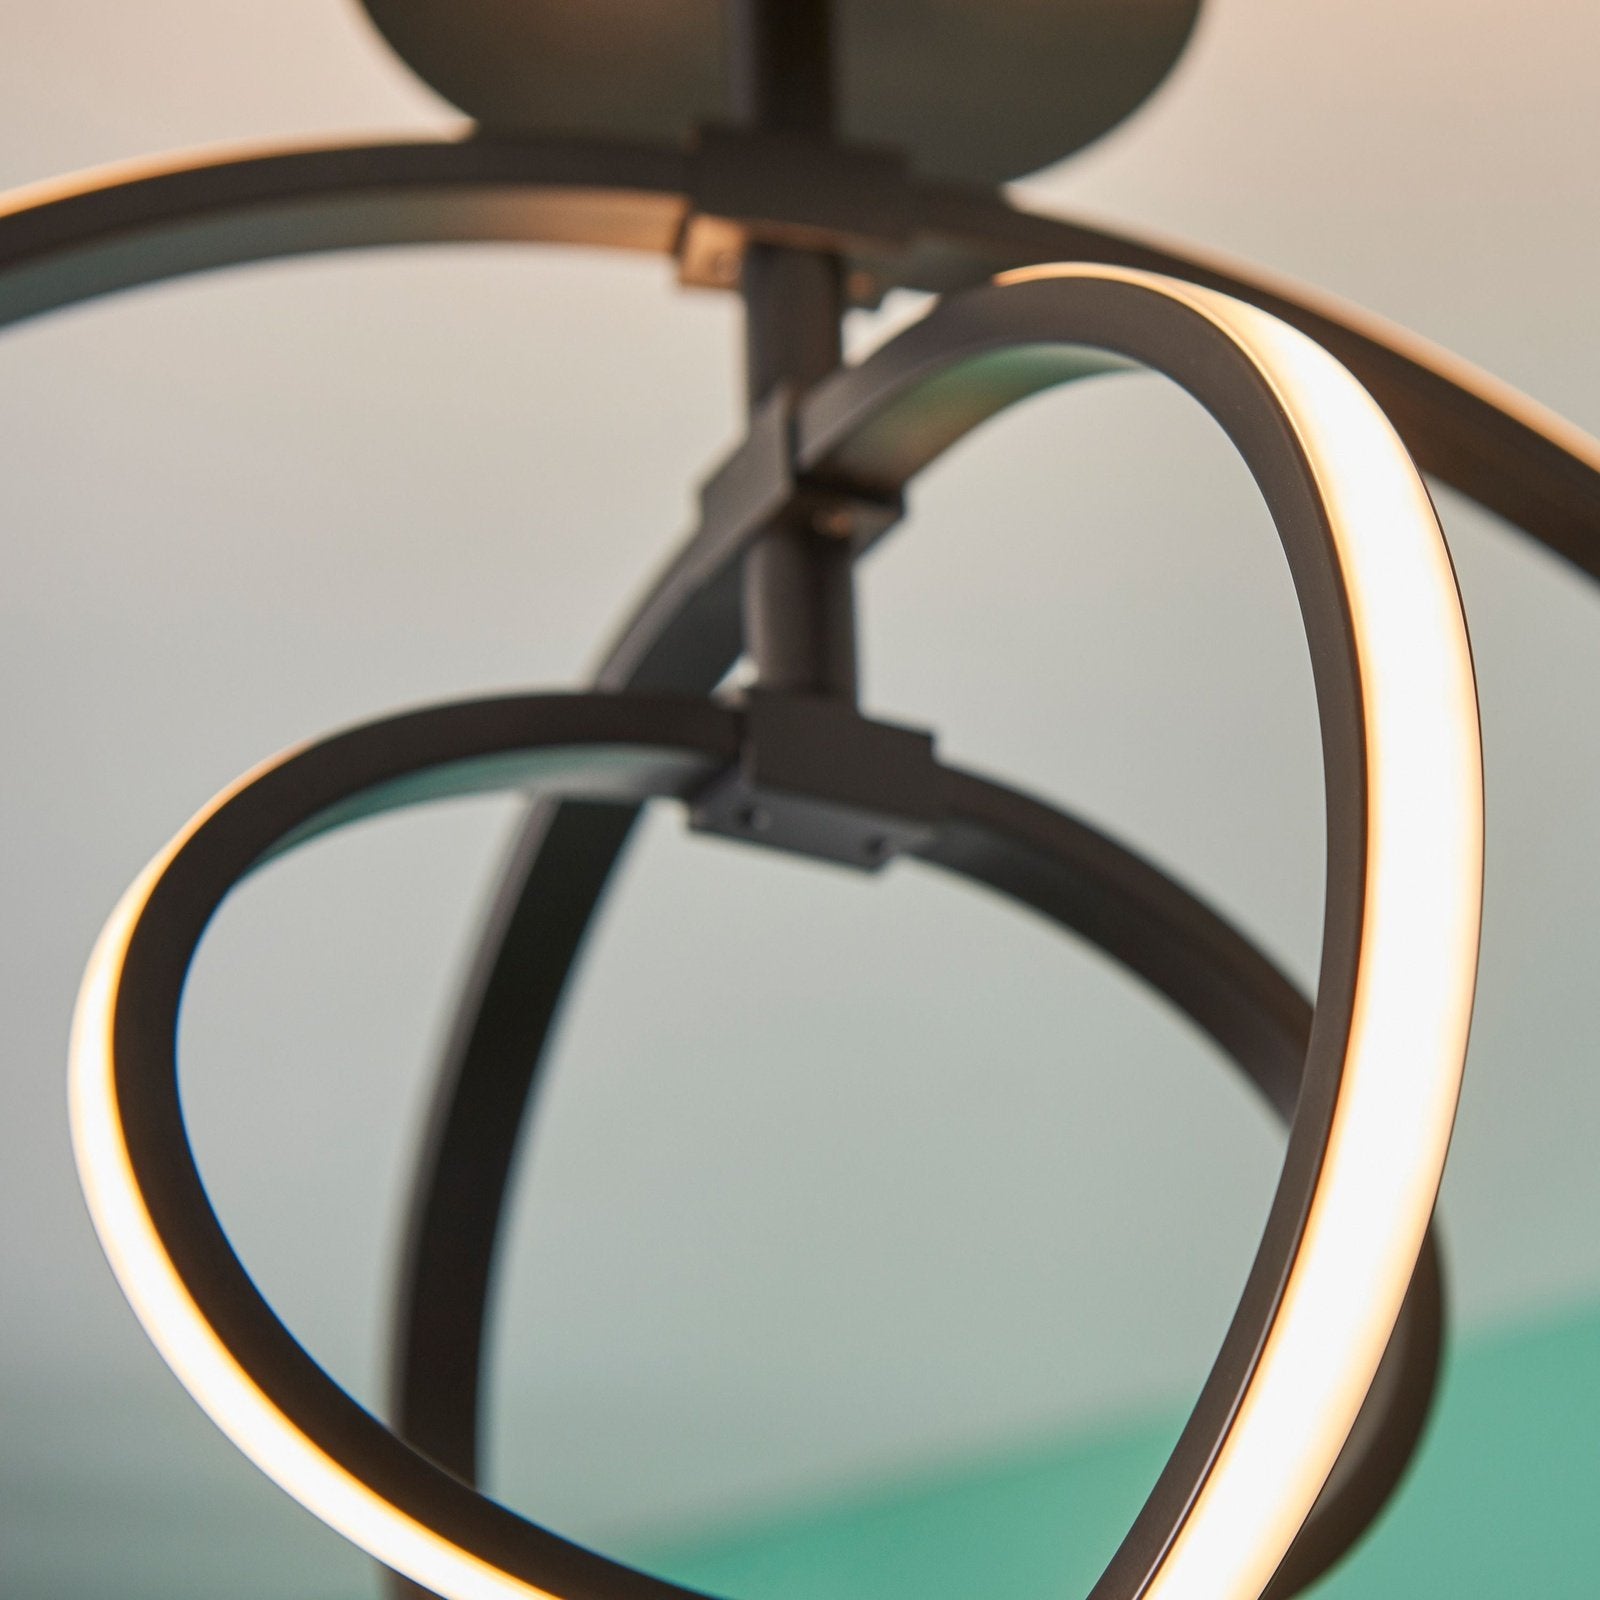 Axis LED Hoop Ceiling Lamp - Semi Flush